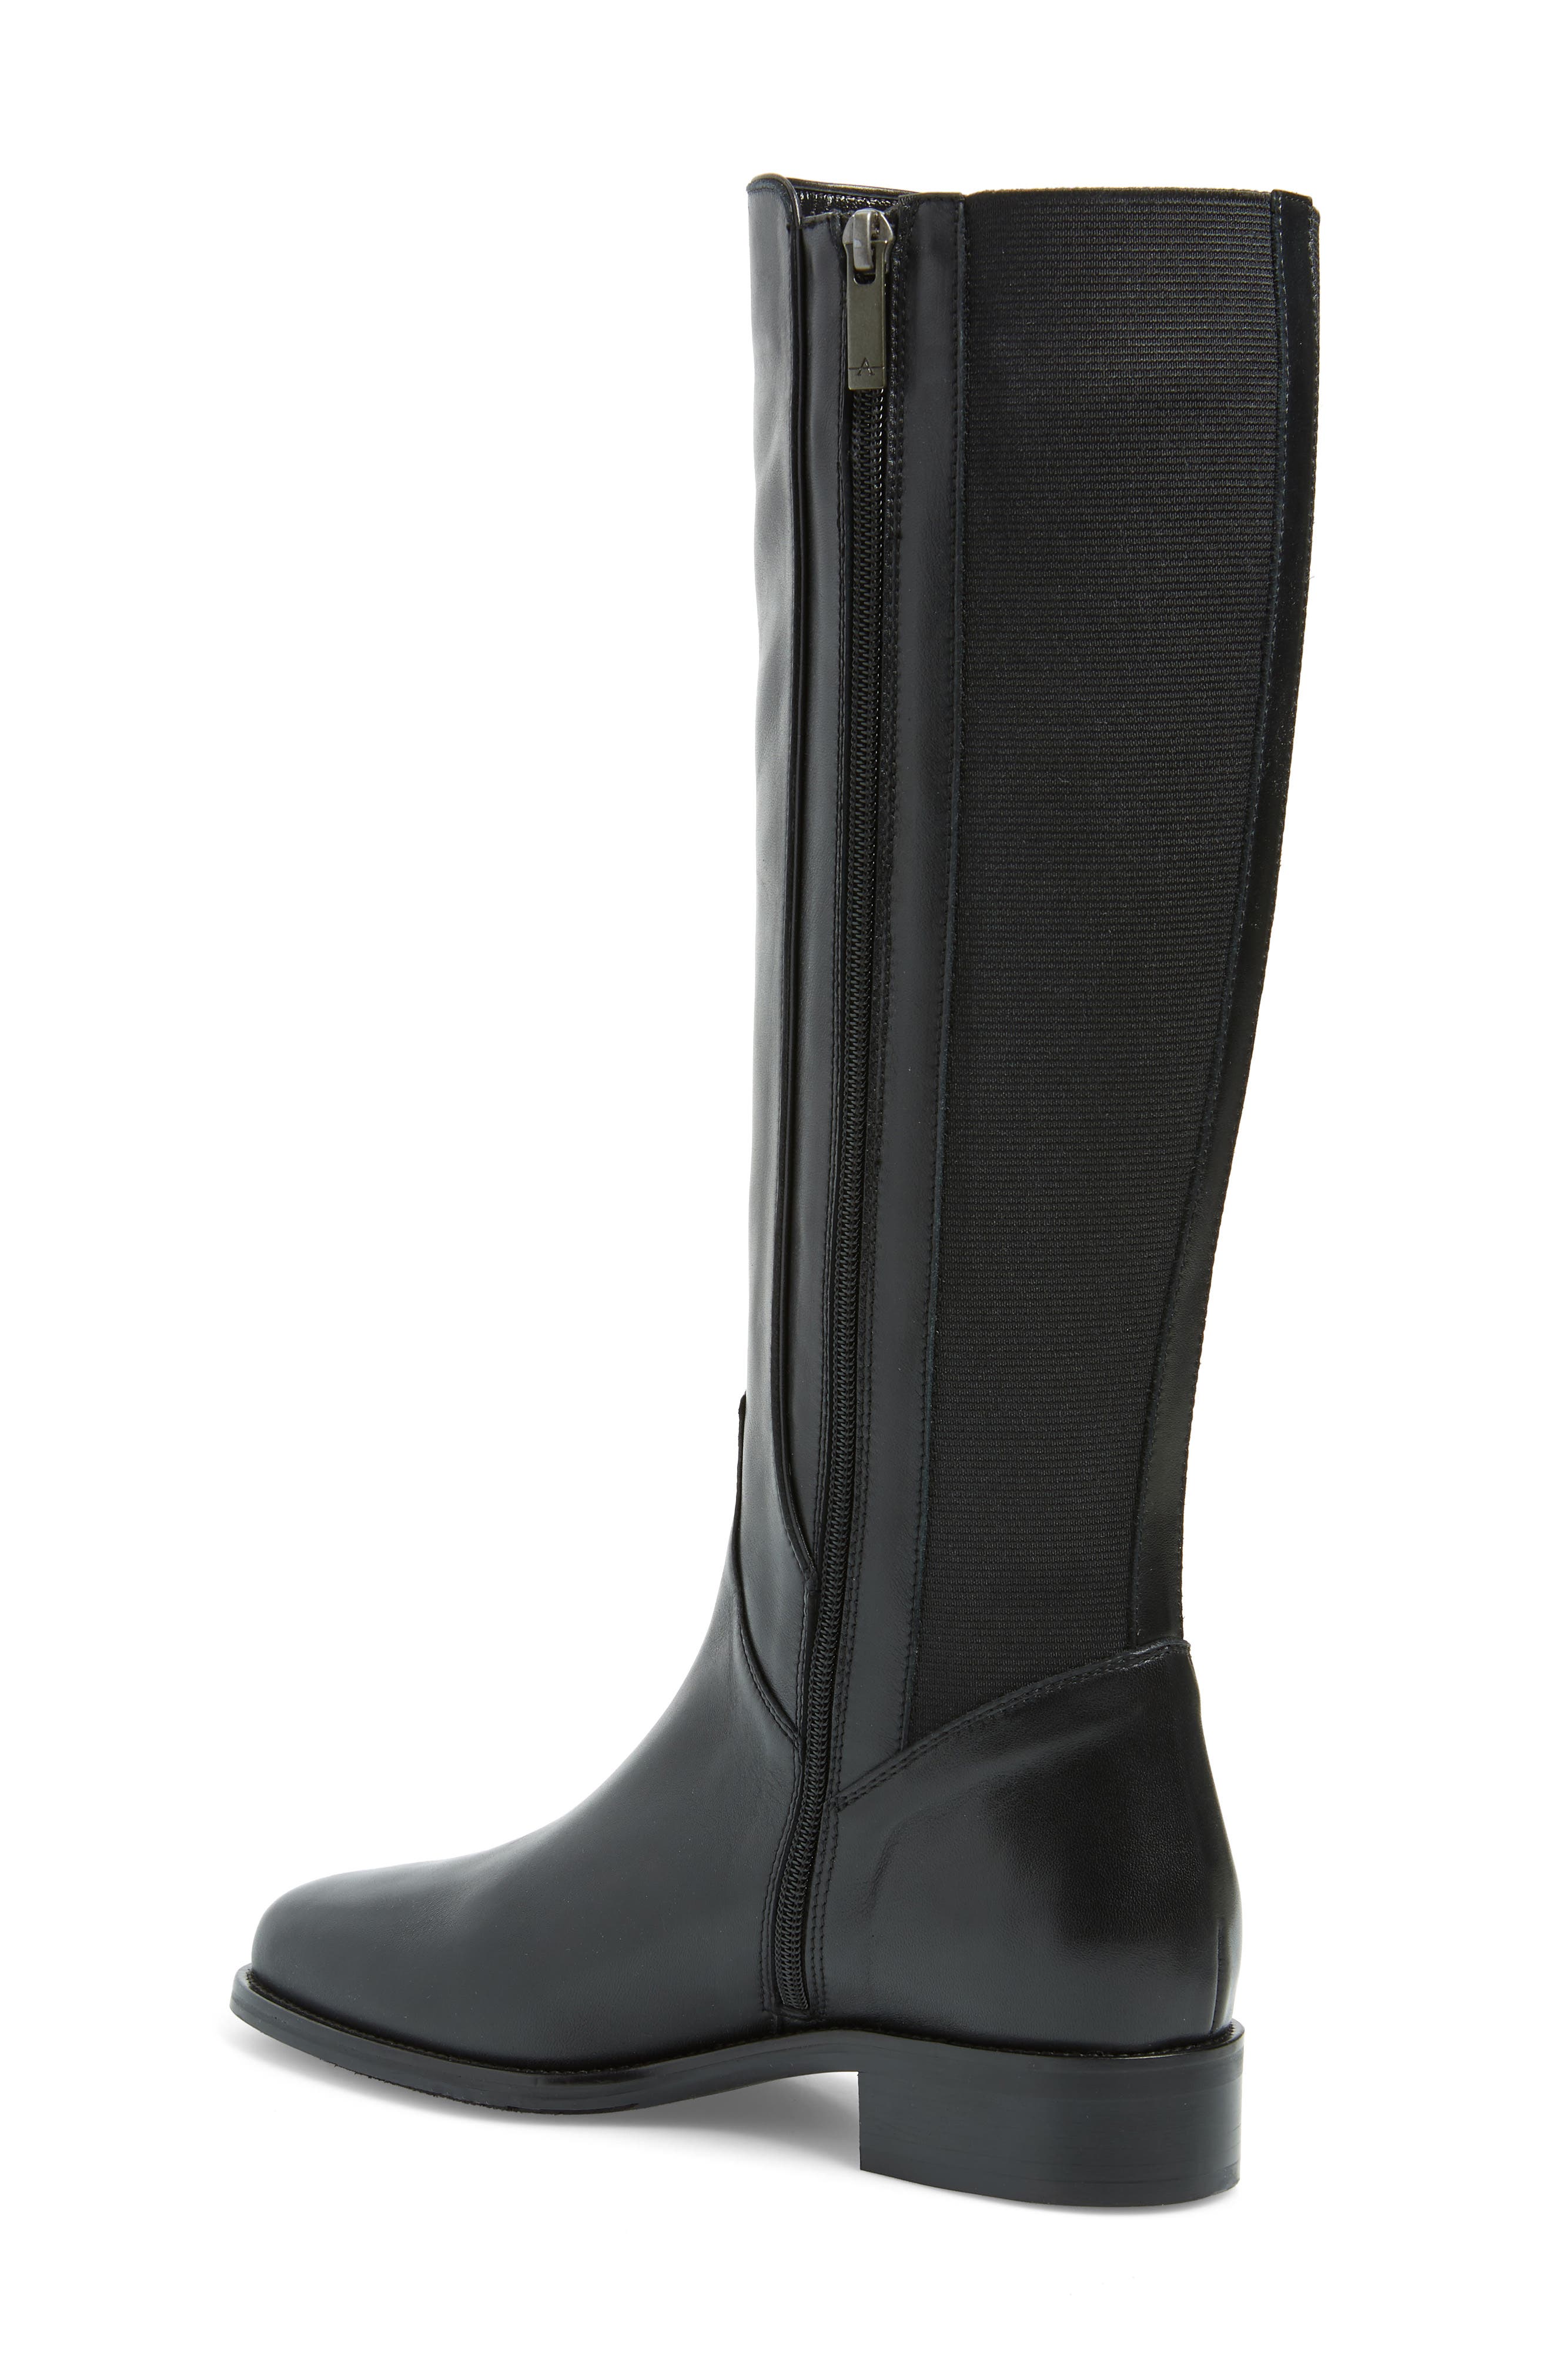 aquatalia neda tall weatherproof boot